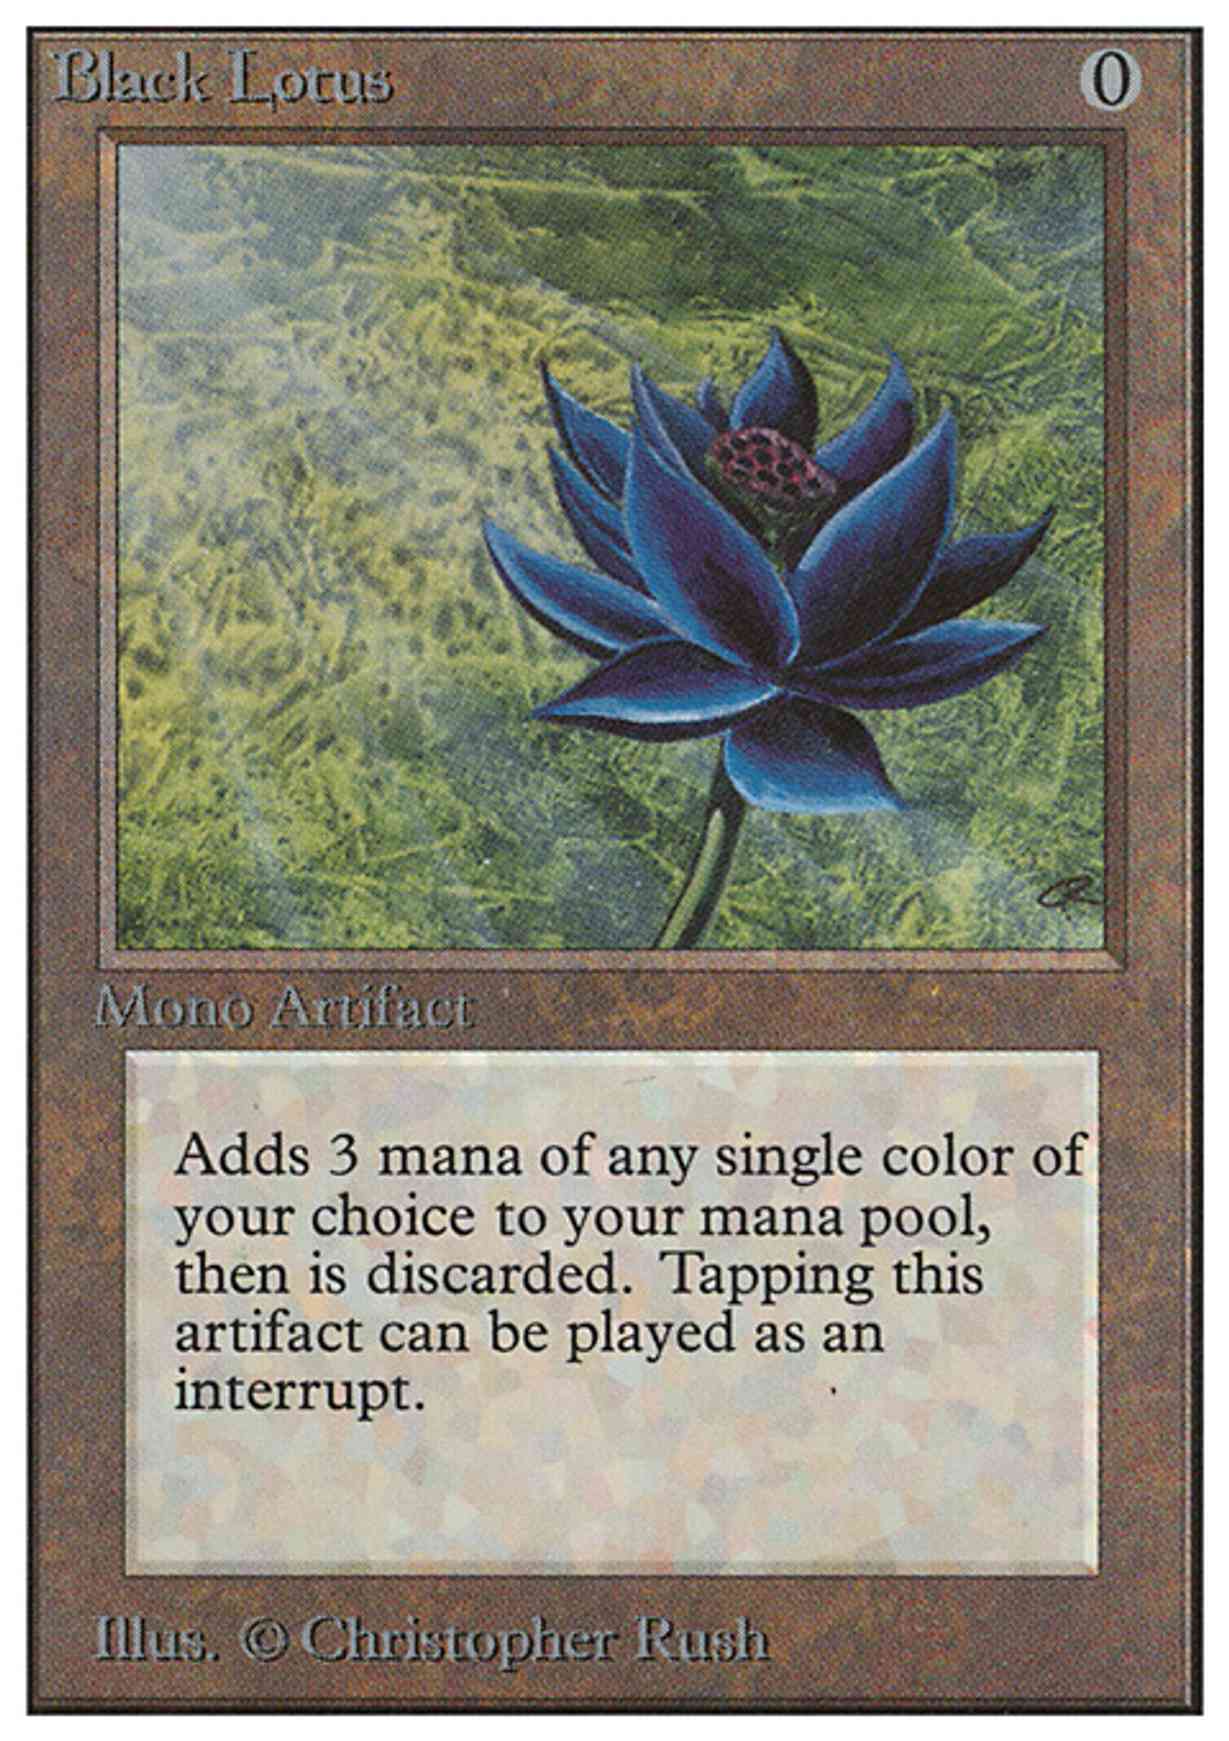 Black Lotus magic card front